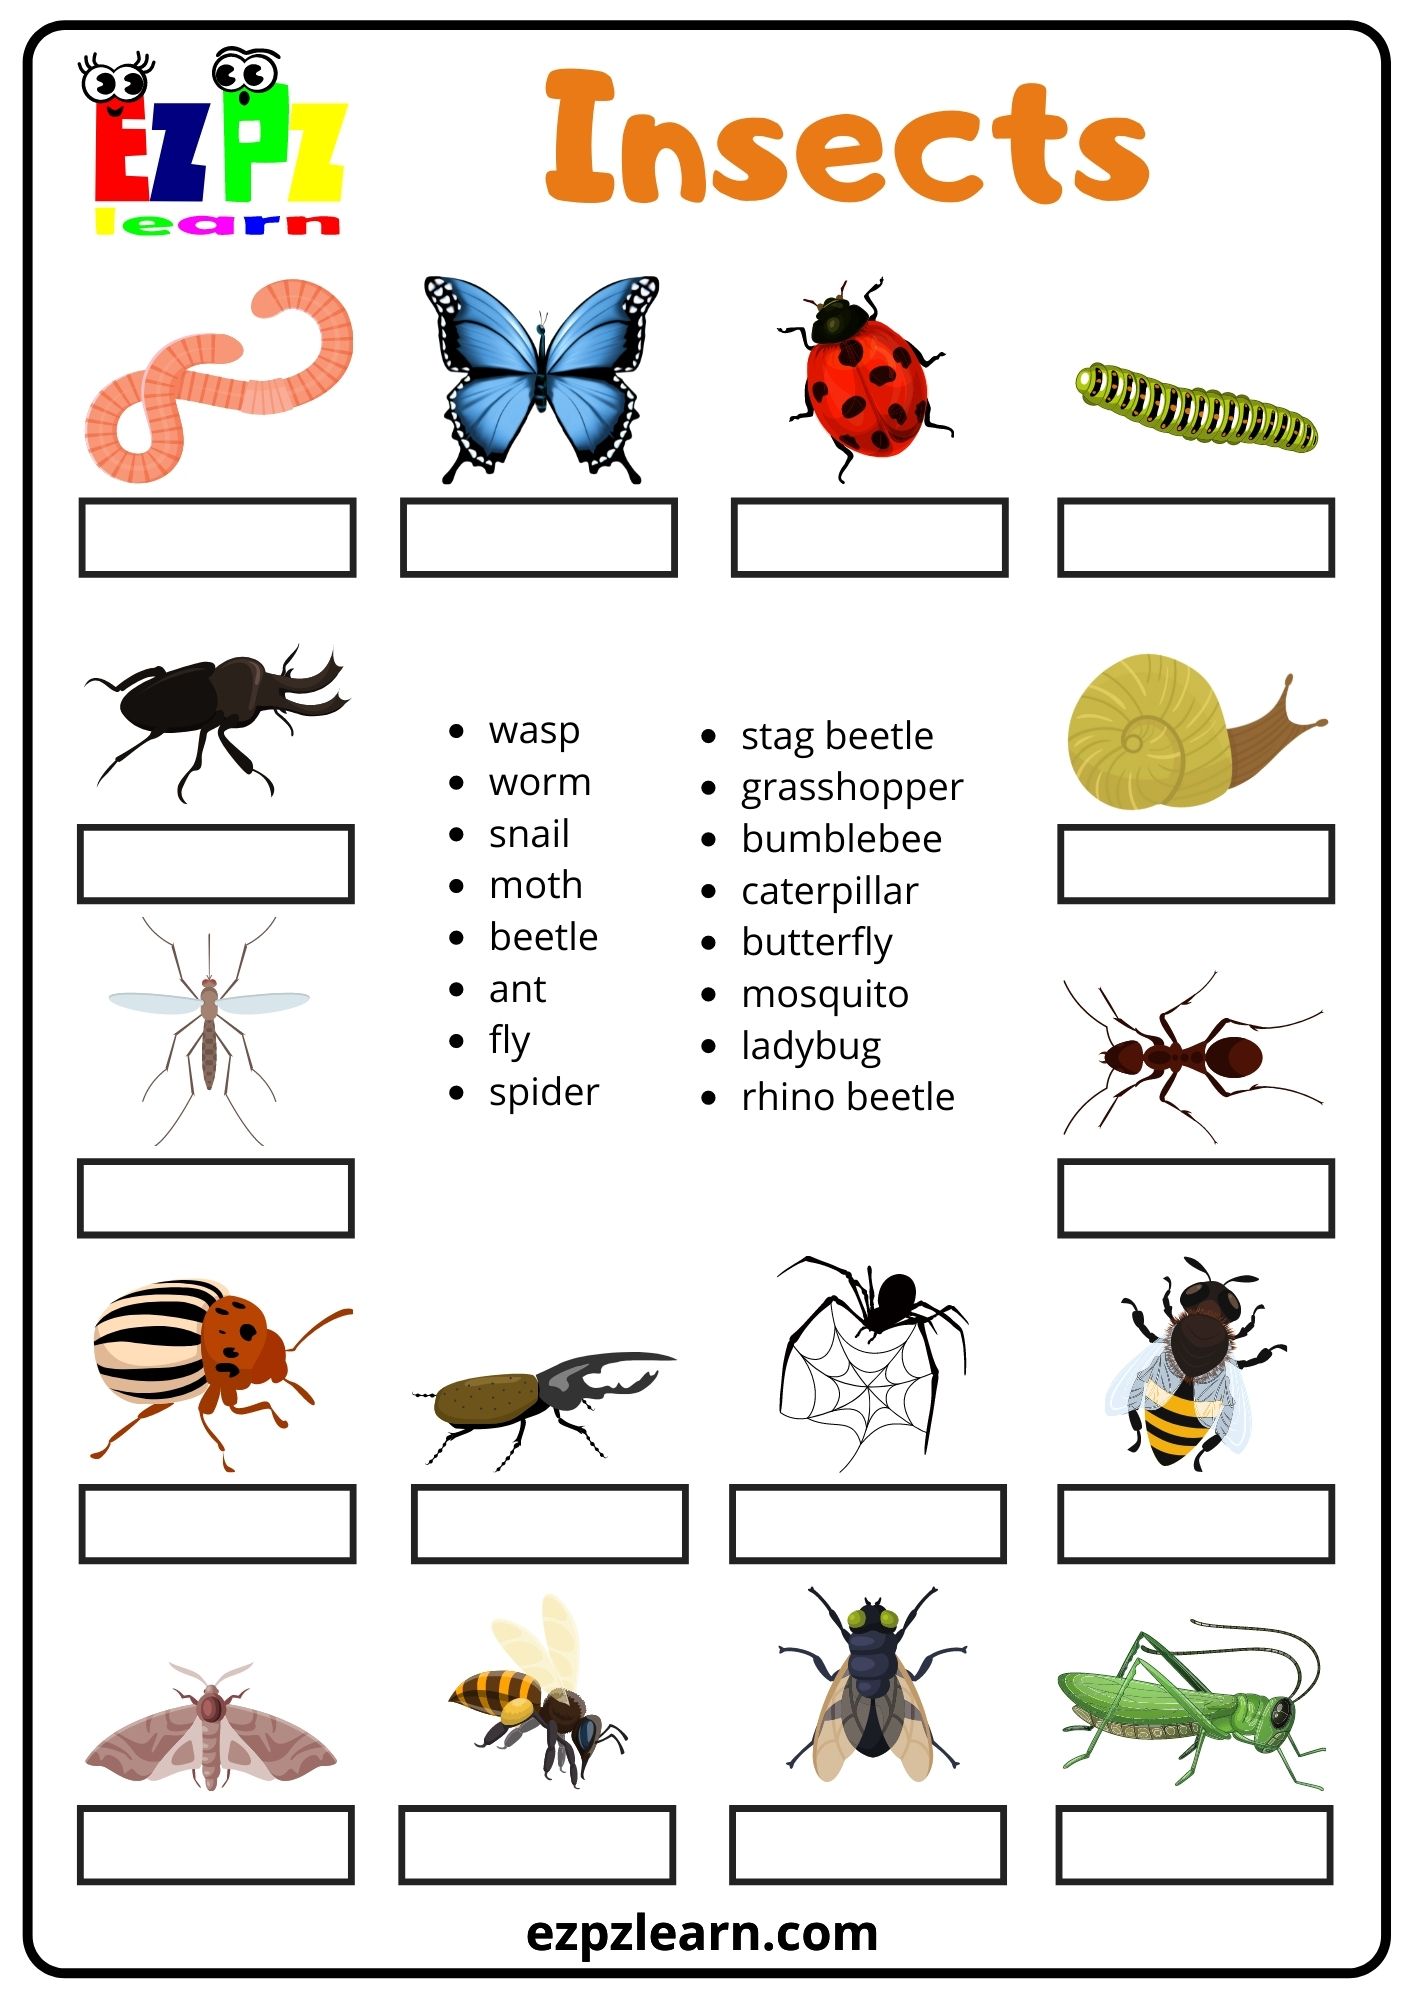 Insects Bugs - Ezpzlearn.com